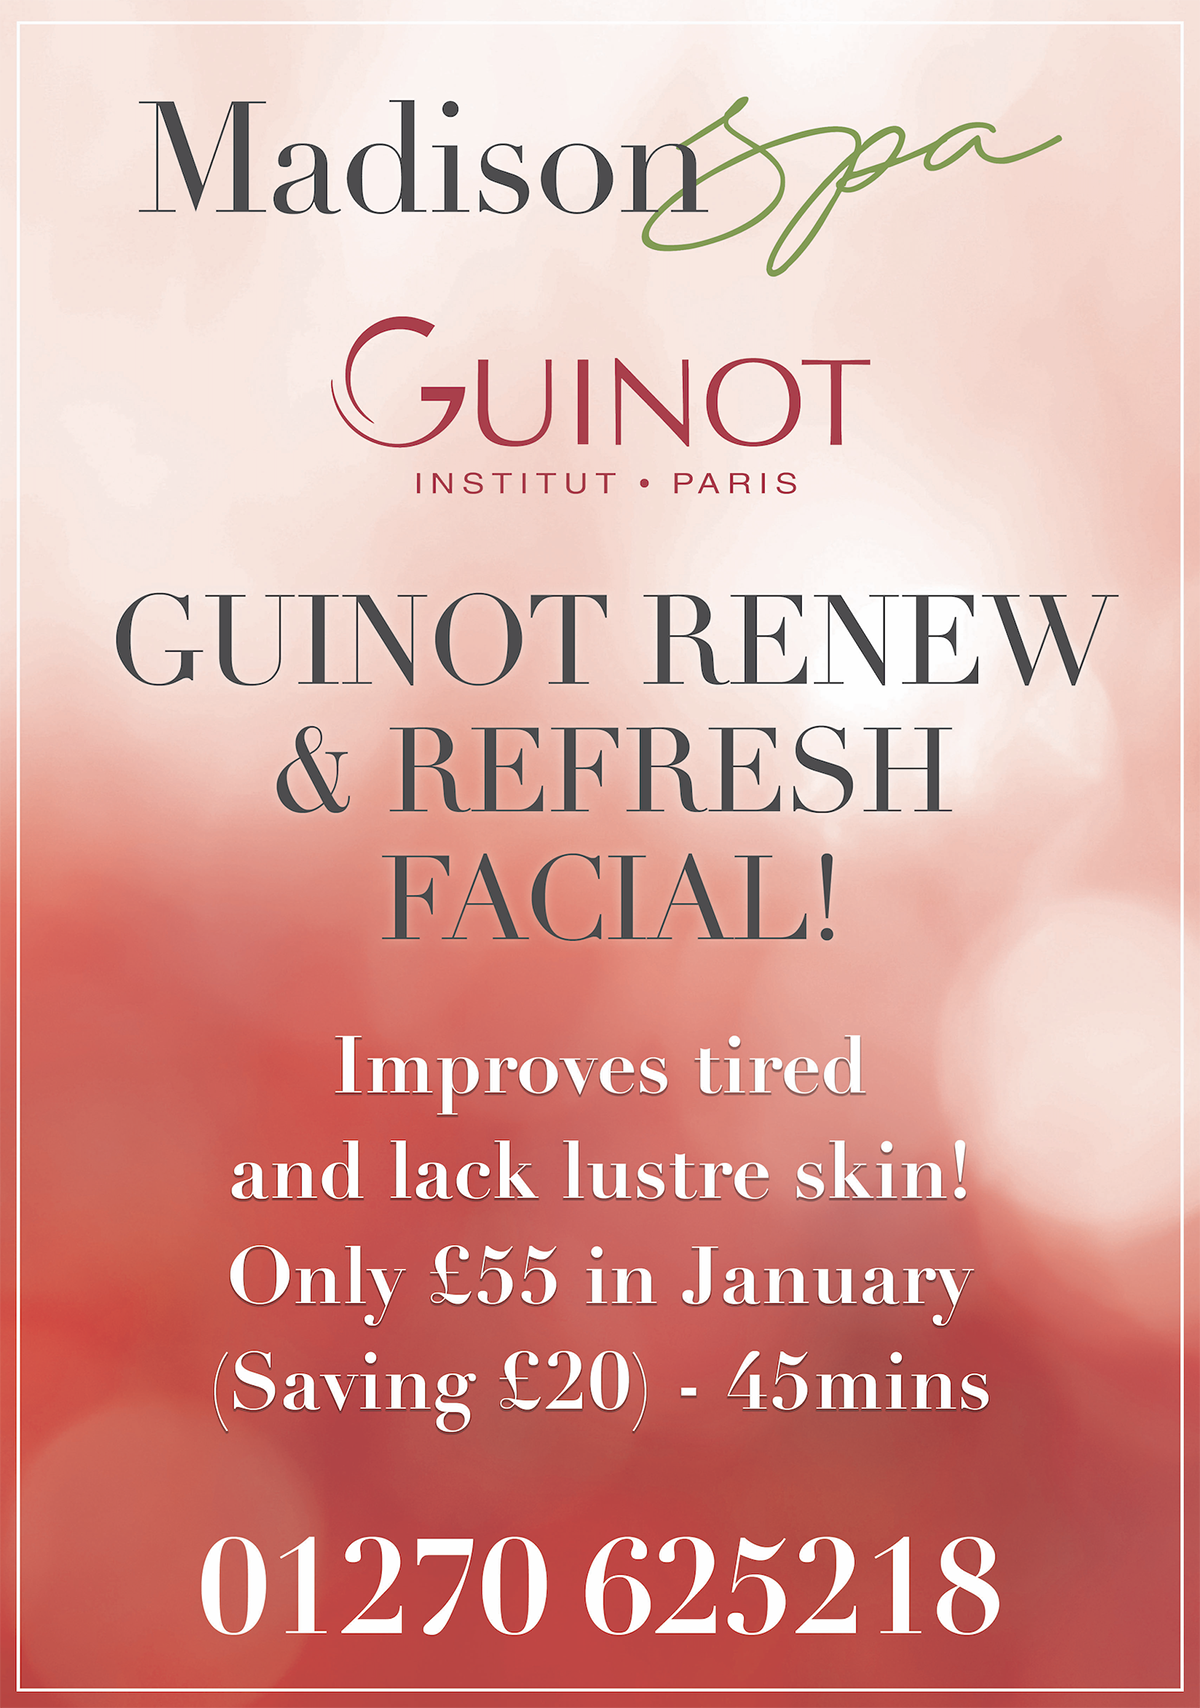 Guinot Renew and Refresh Facial at Madison Spa